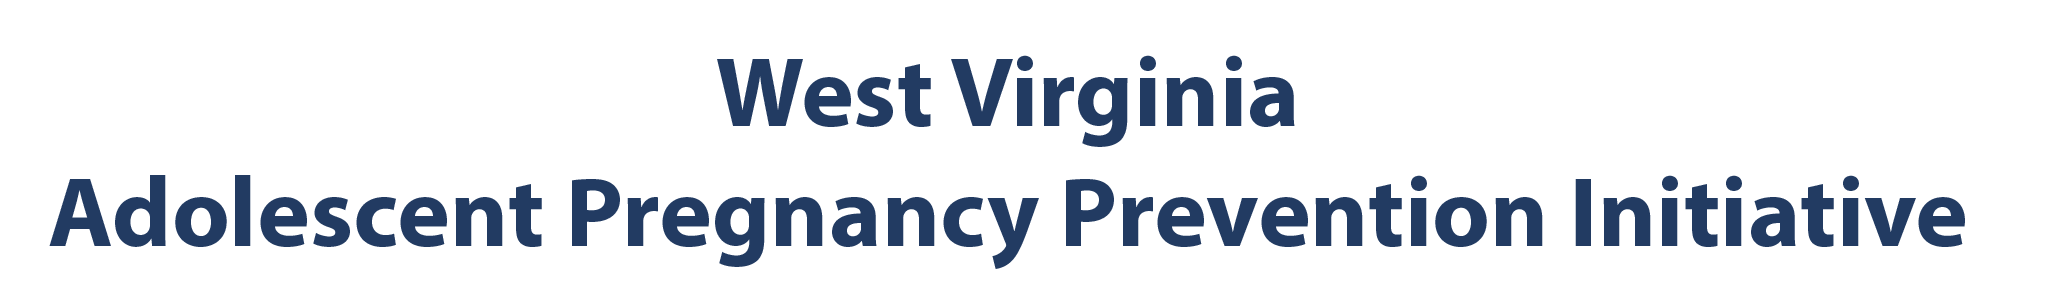 West Virginia
Adolescent Pregnancy Prevention Initative